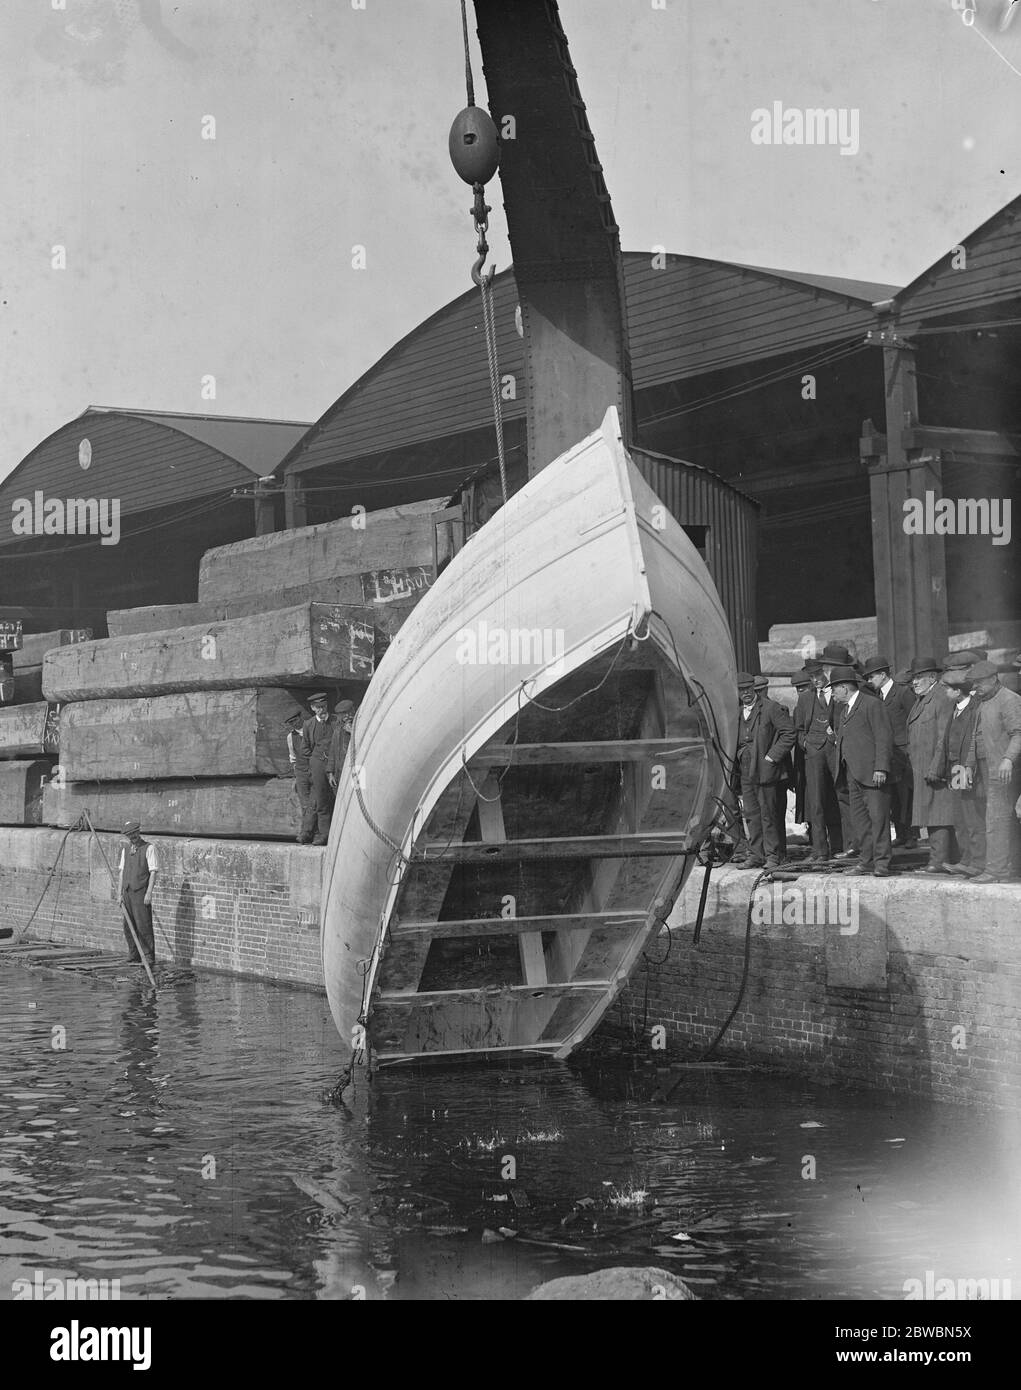 The Gaskin Hart Lifeboat Stock Photo